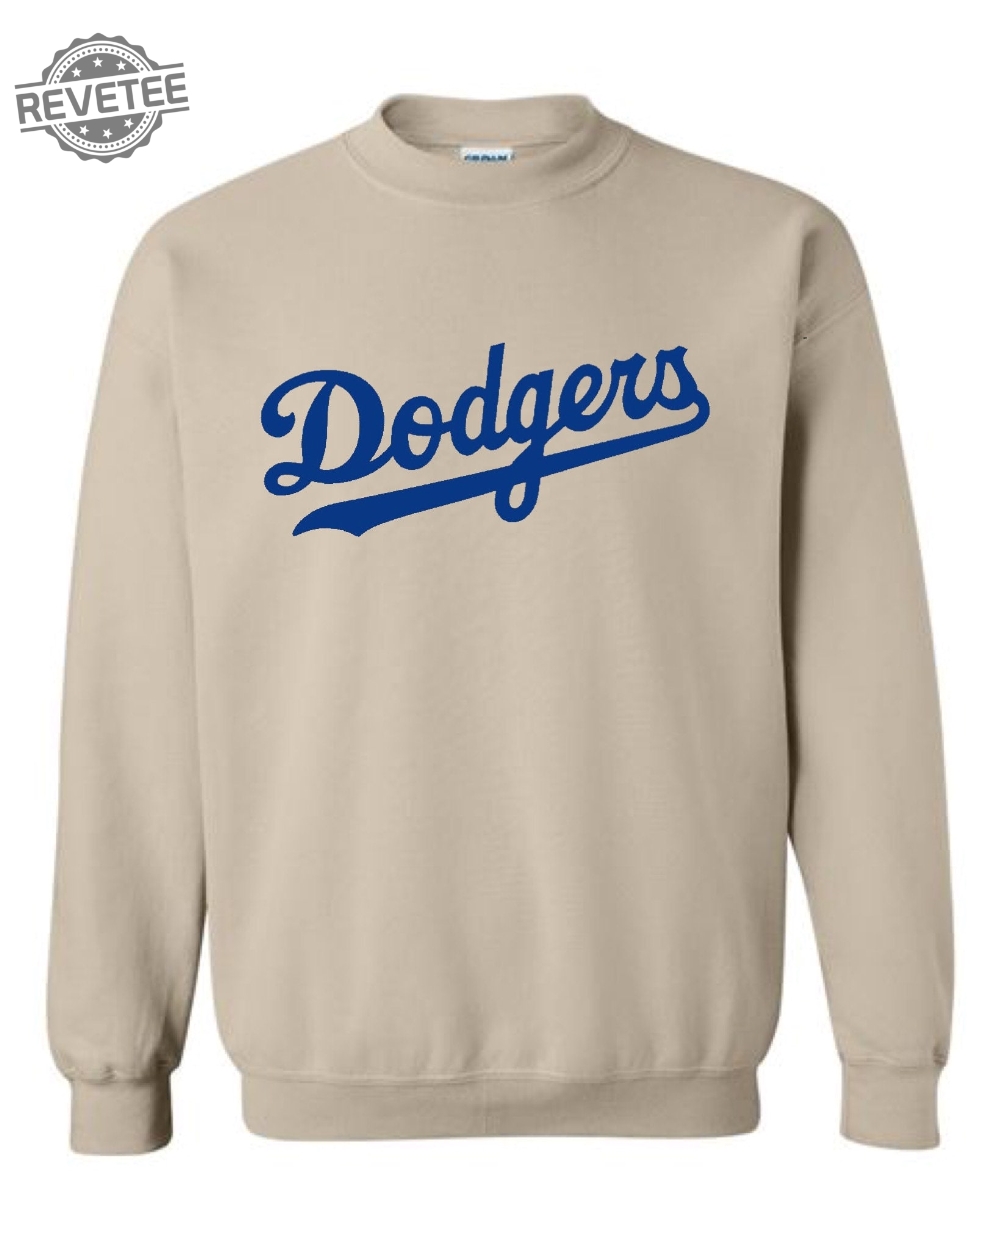 Los Angeles Dodgers Crewneck La Dodgers Crewneck Dodgers Baseball Crewneck Los Angeles Dodgers Sweatshirt Ladodgers Shirt